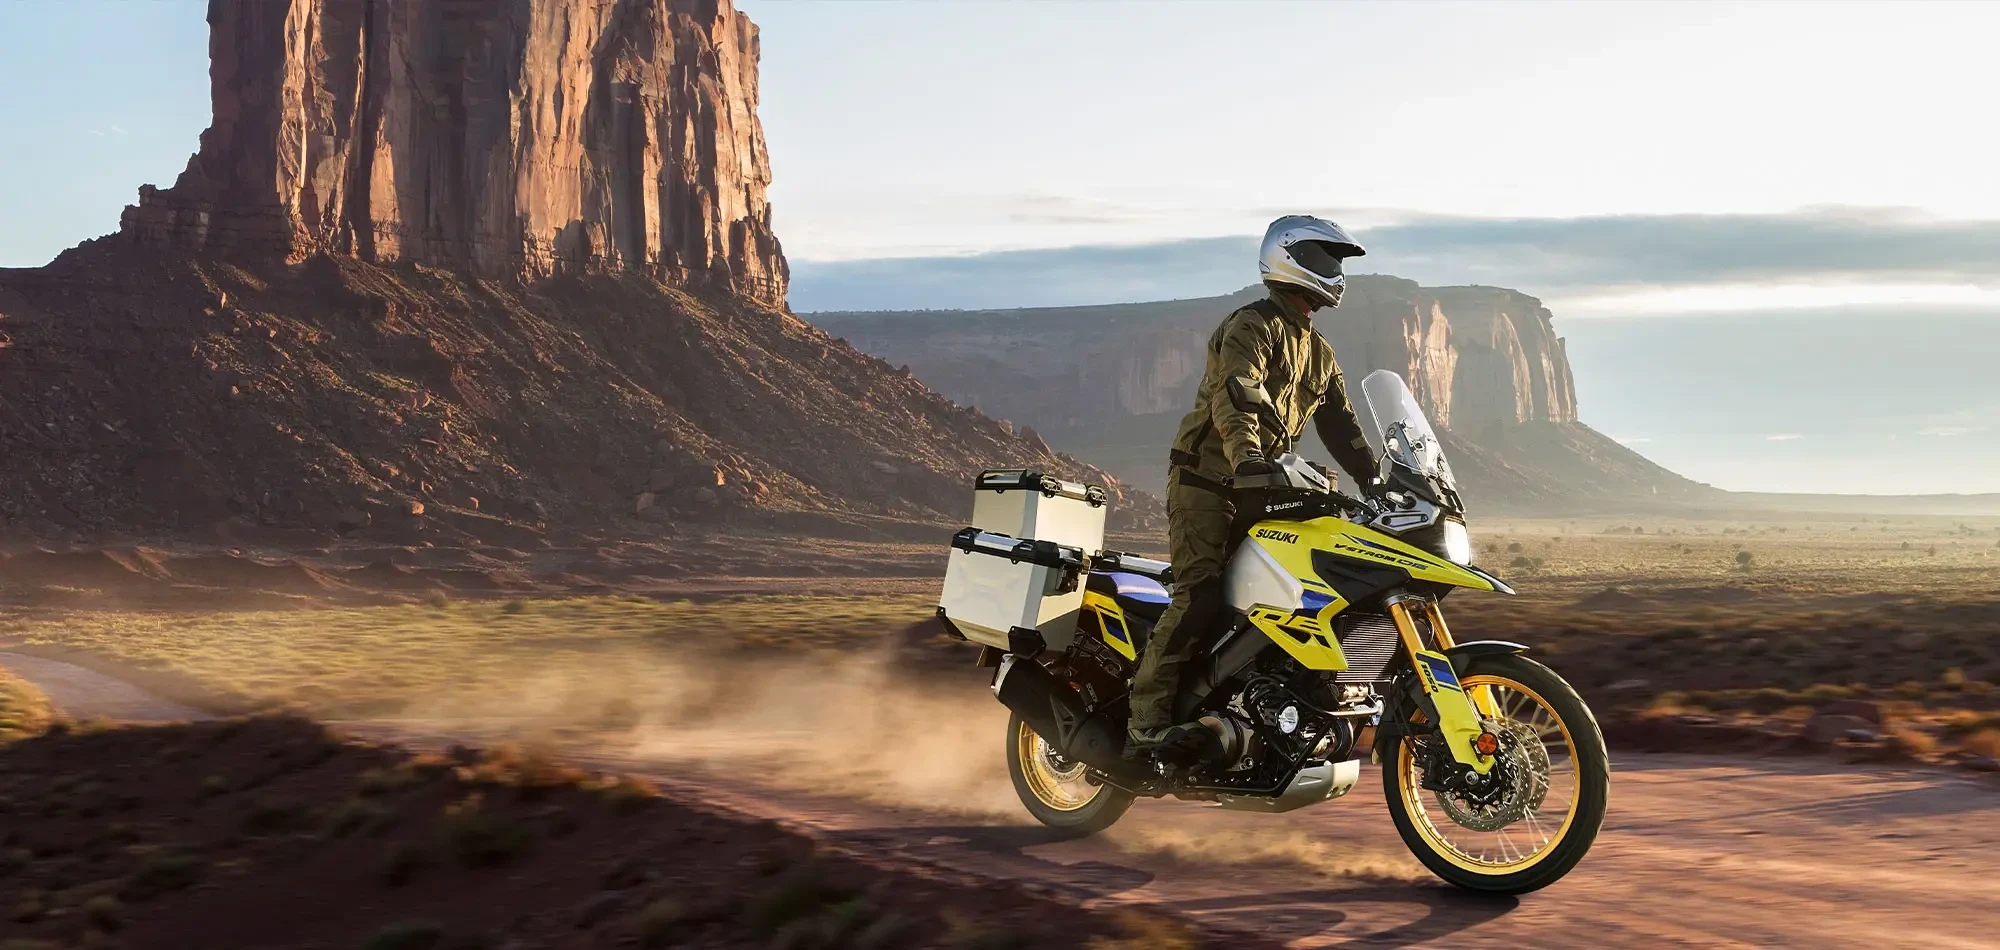 Action image of Suzuki V-Strom 1050DE adventure motorcycle in Champion Yellow, travelling through desert plain landscape